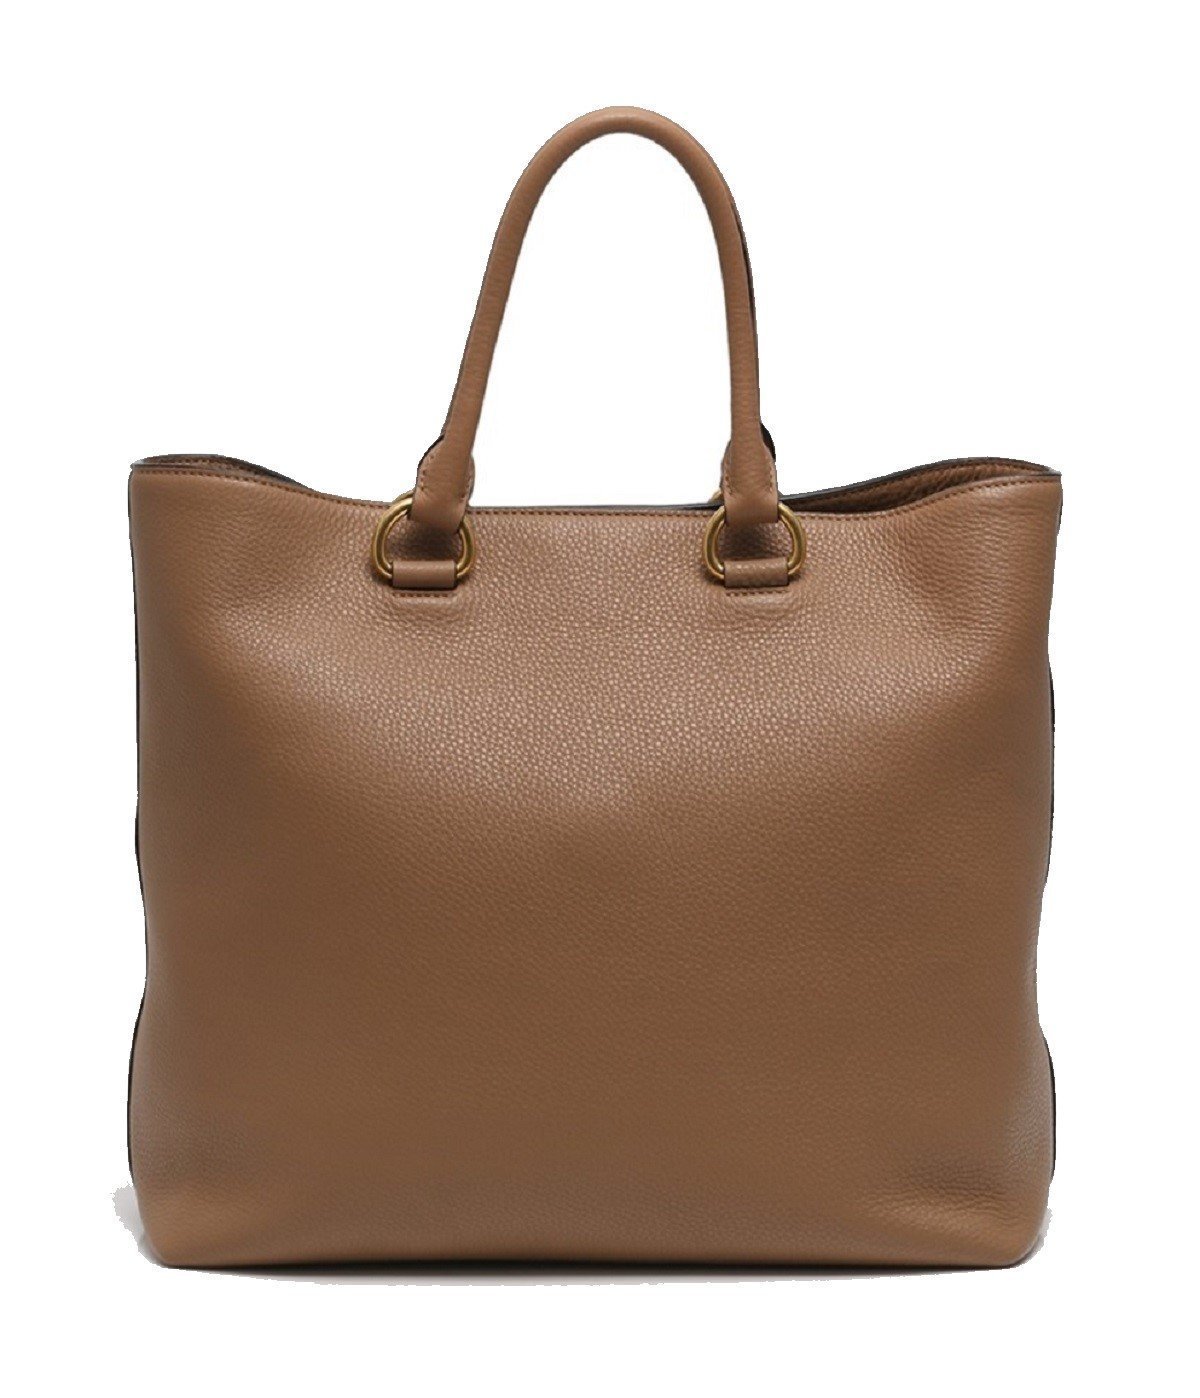 Prada Vitello Phenix Cognac Brown Shopping Tote Bag - LUXURYMRKT